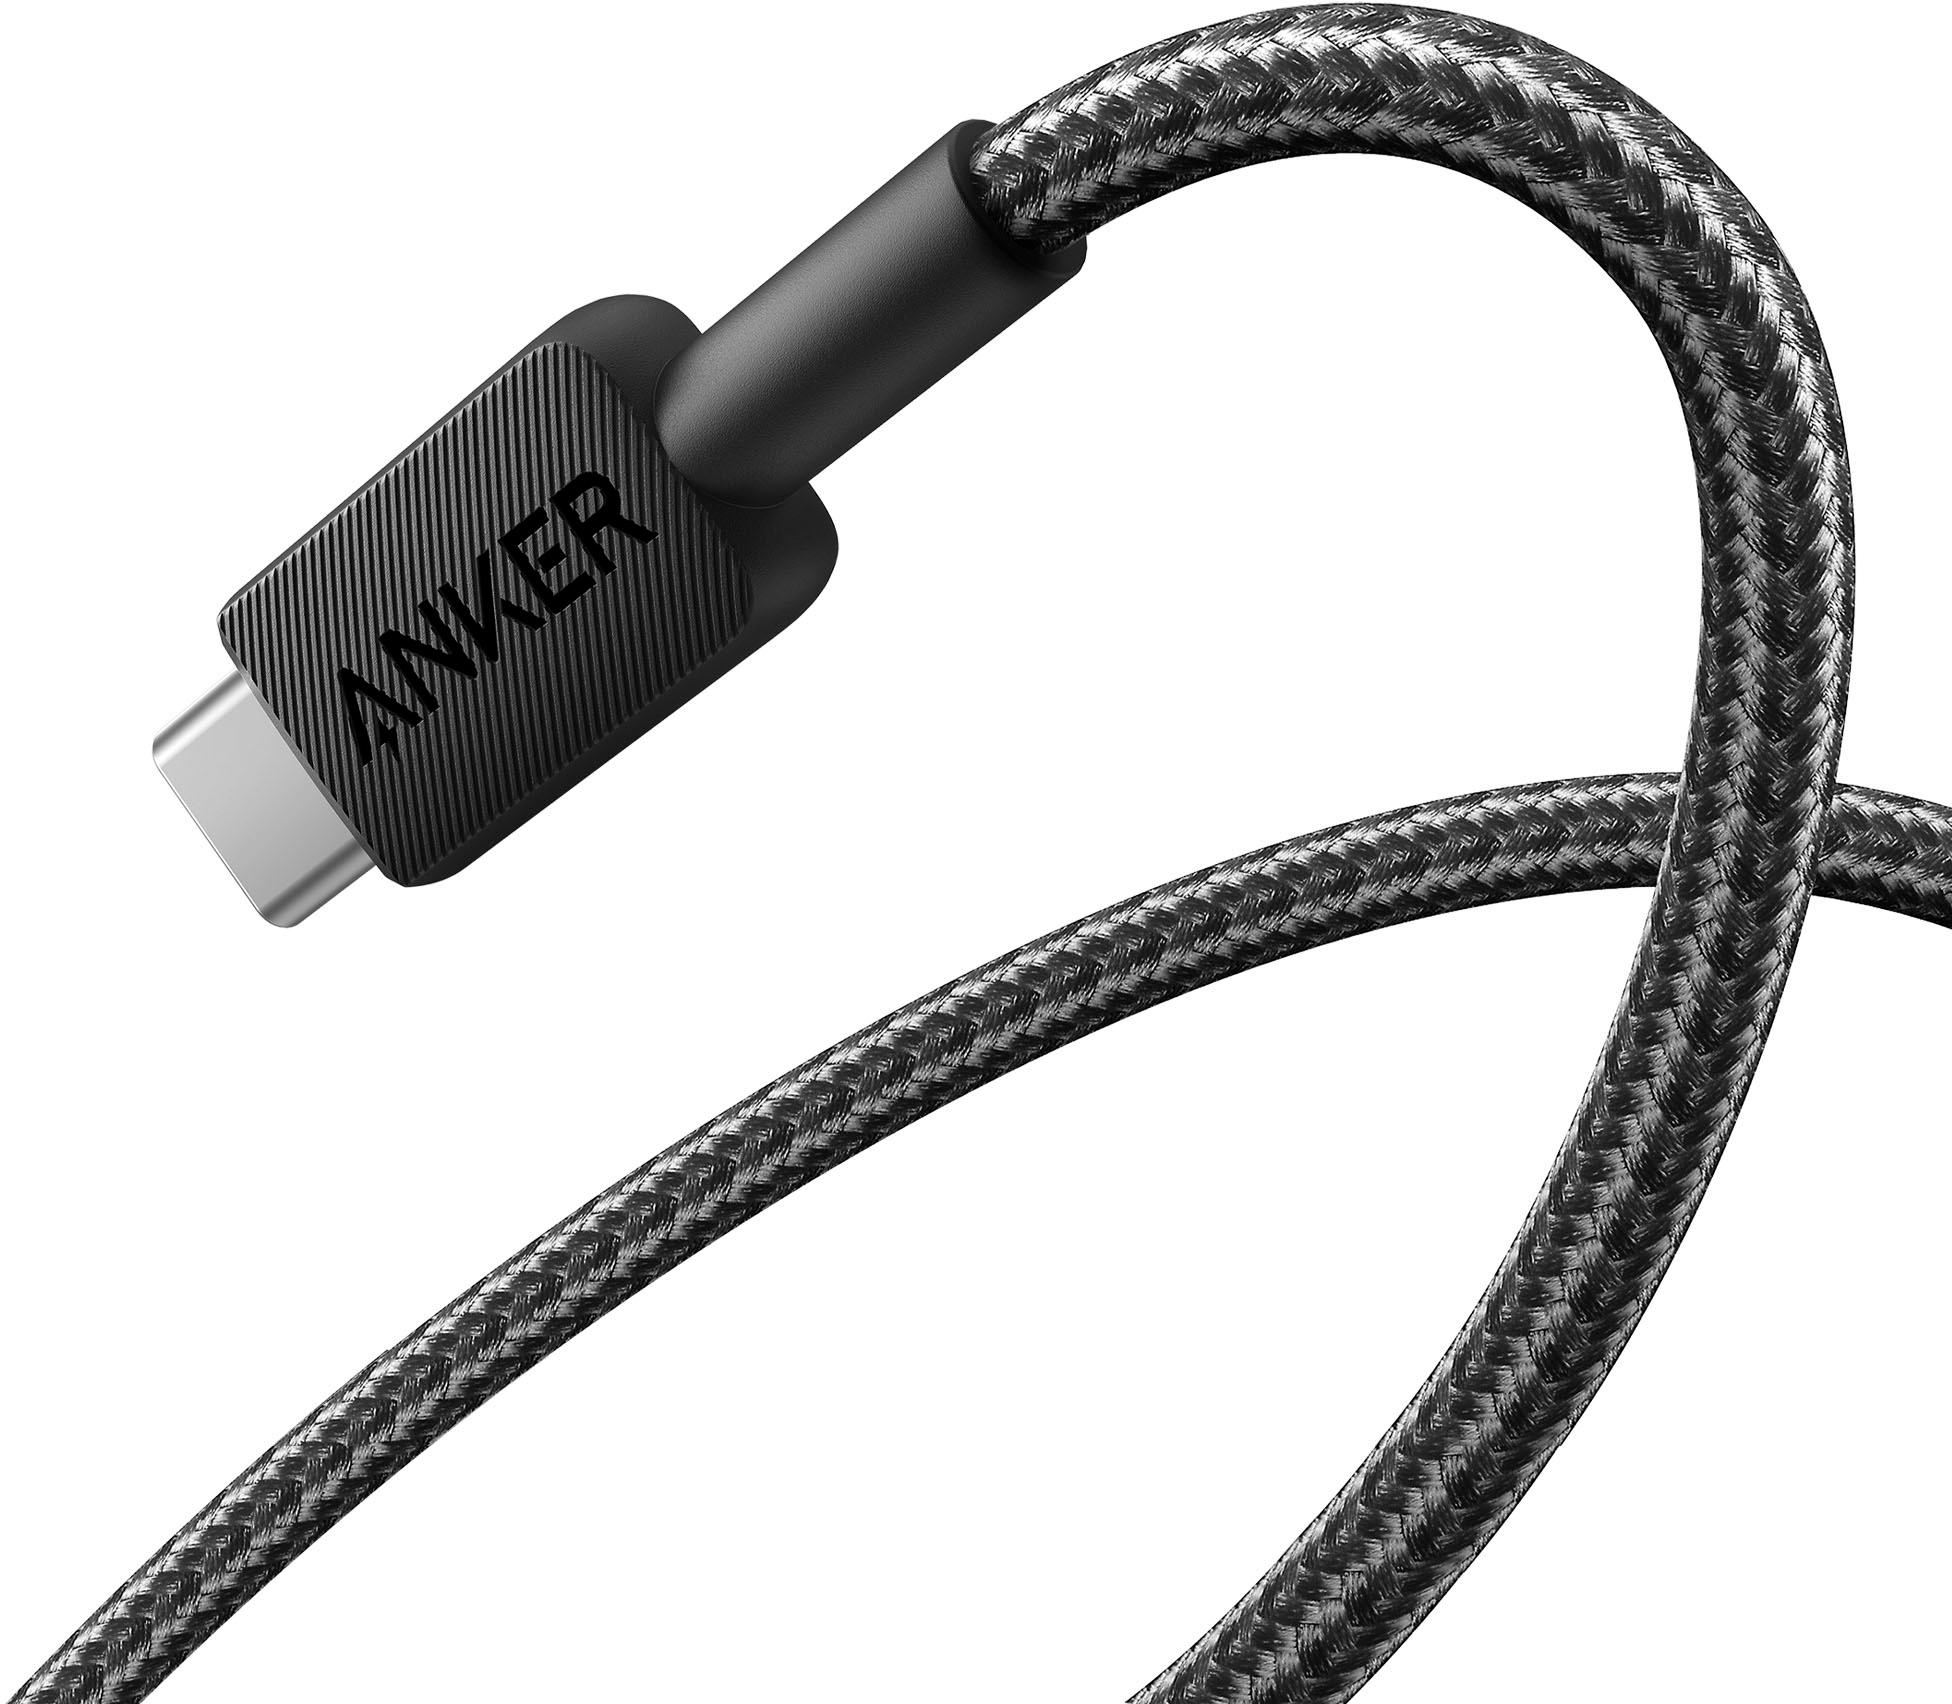 Anker - 322 USB-A to USB-C Cable - 6ft, Nylon - Black